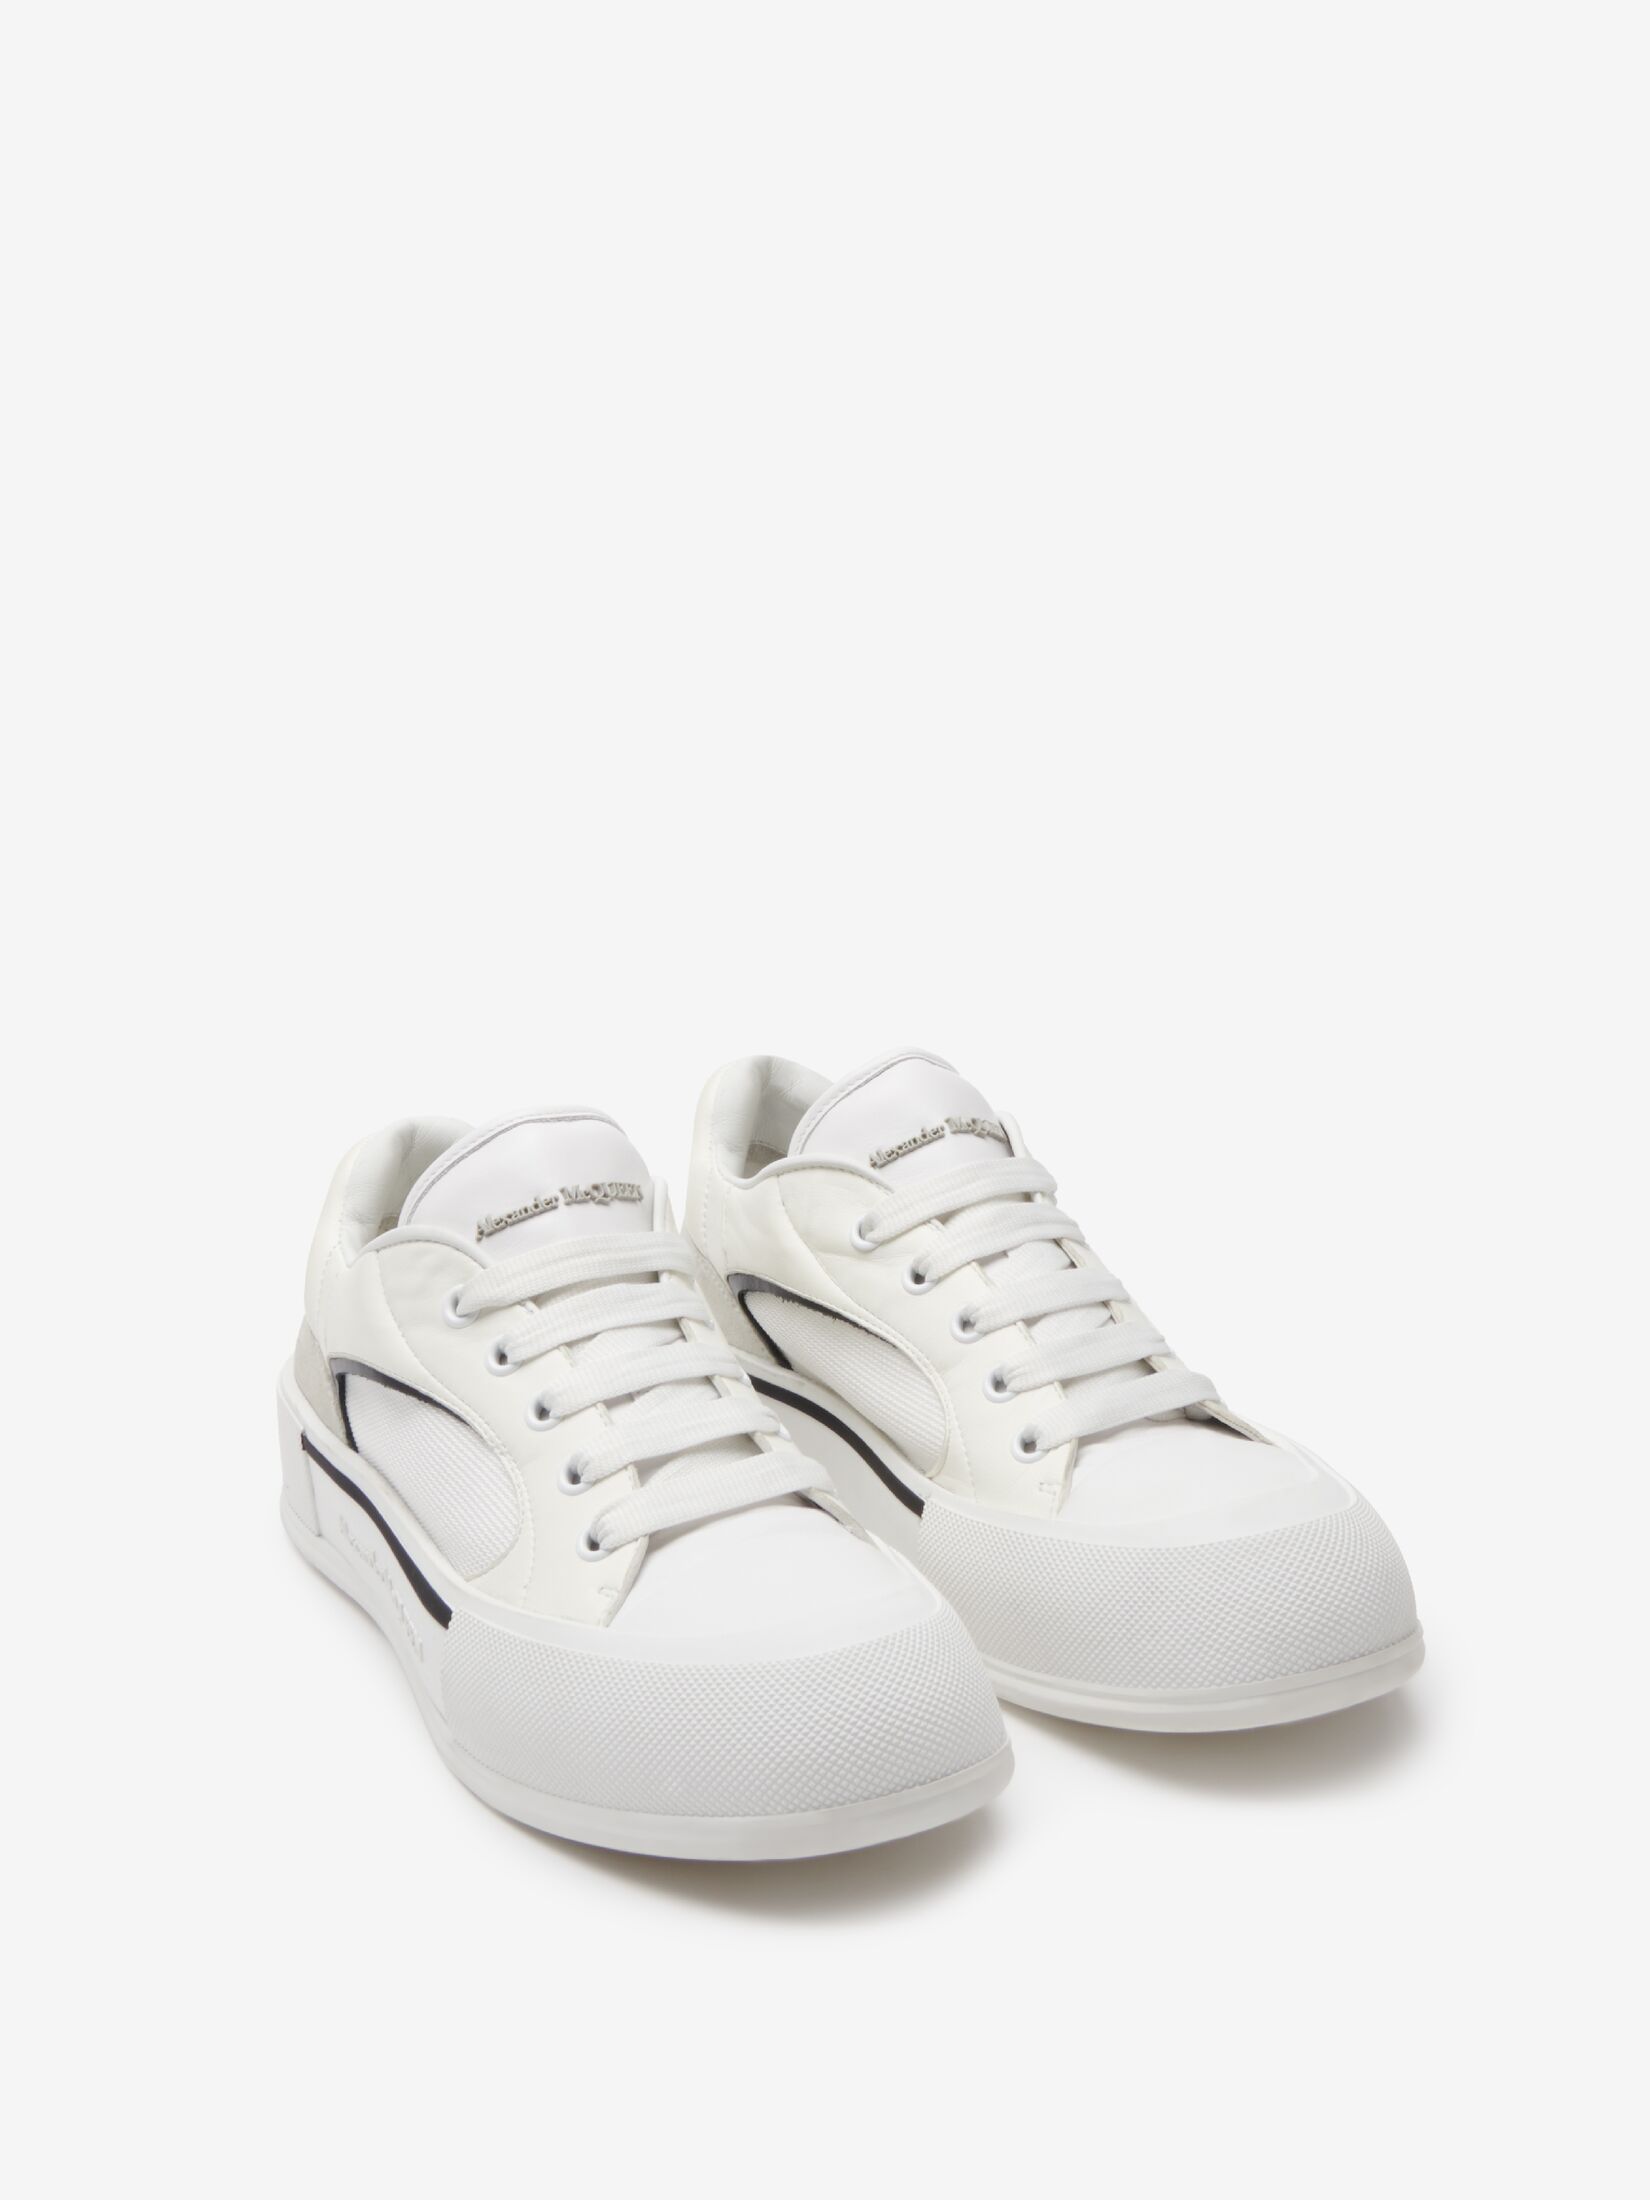 Alexander McQueen Deck Plimsoll High Top Sneaker Black White (Women's)